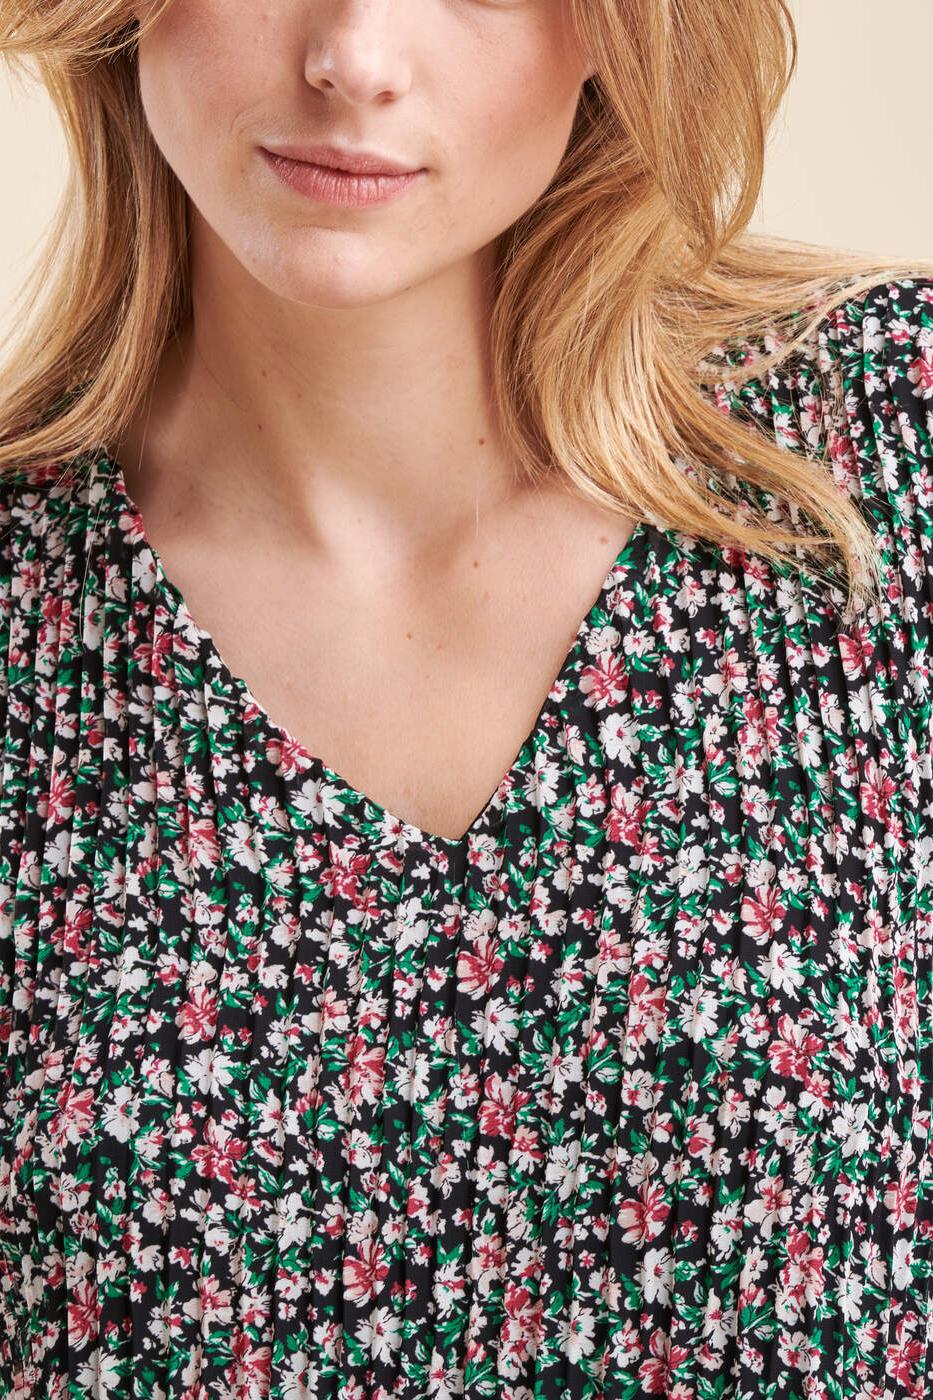 Floral patterned blouse - 42